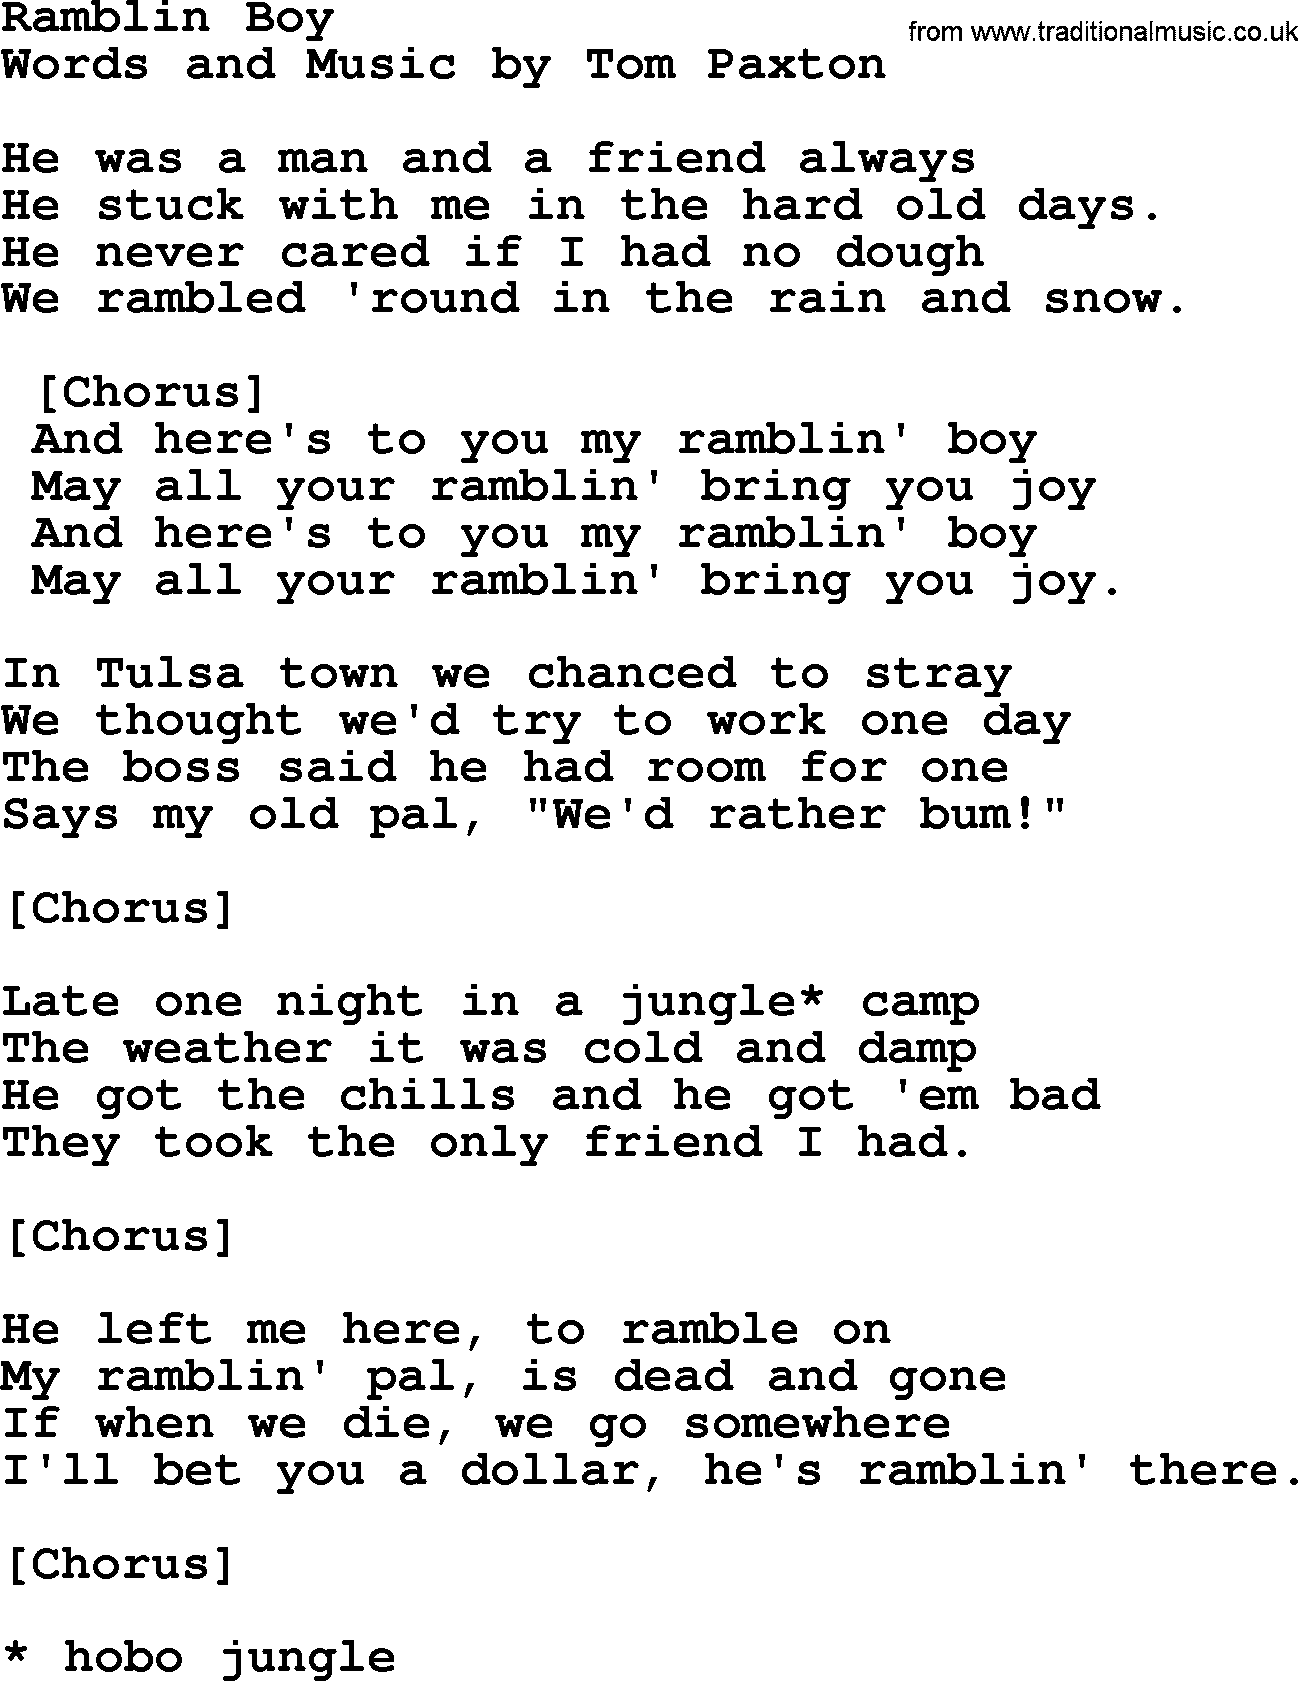 Tom Paxton song: Ramblin Boy, lyrics